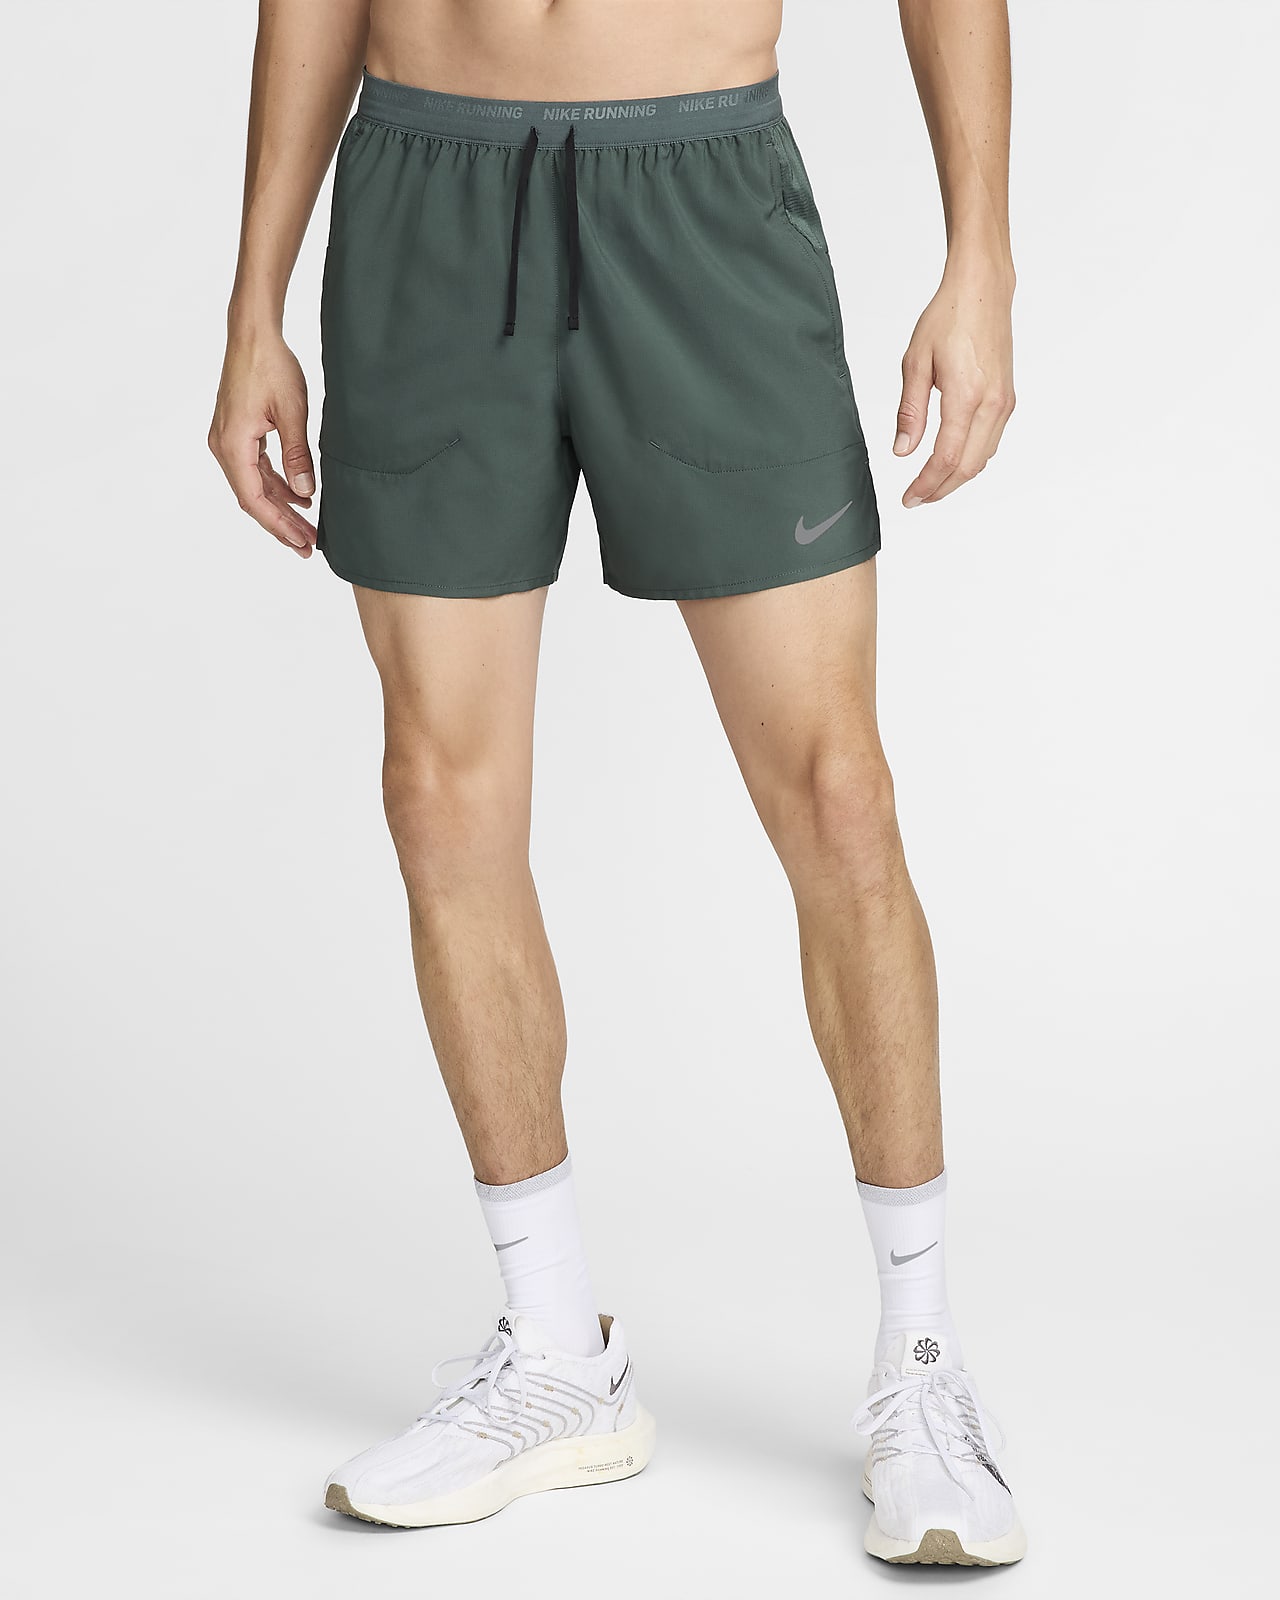 Nike Stride Dri-FIT 13 cm-es, belső rövidnadrággal bélelt férfi futórövidnadrág